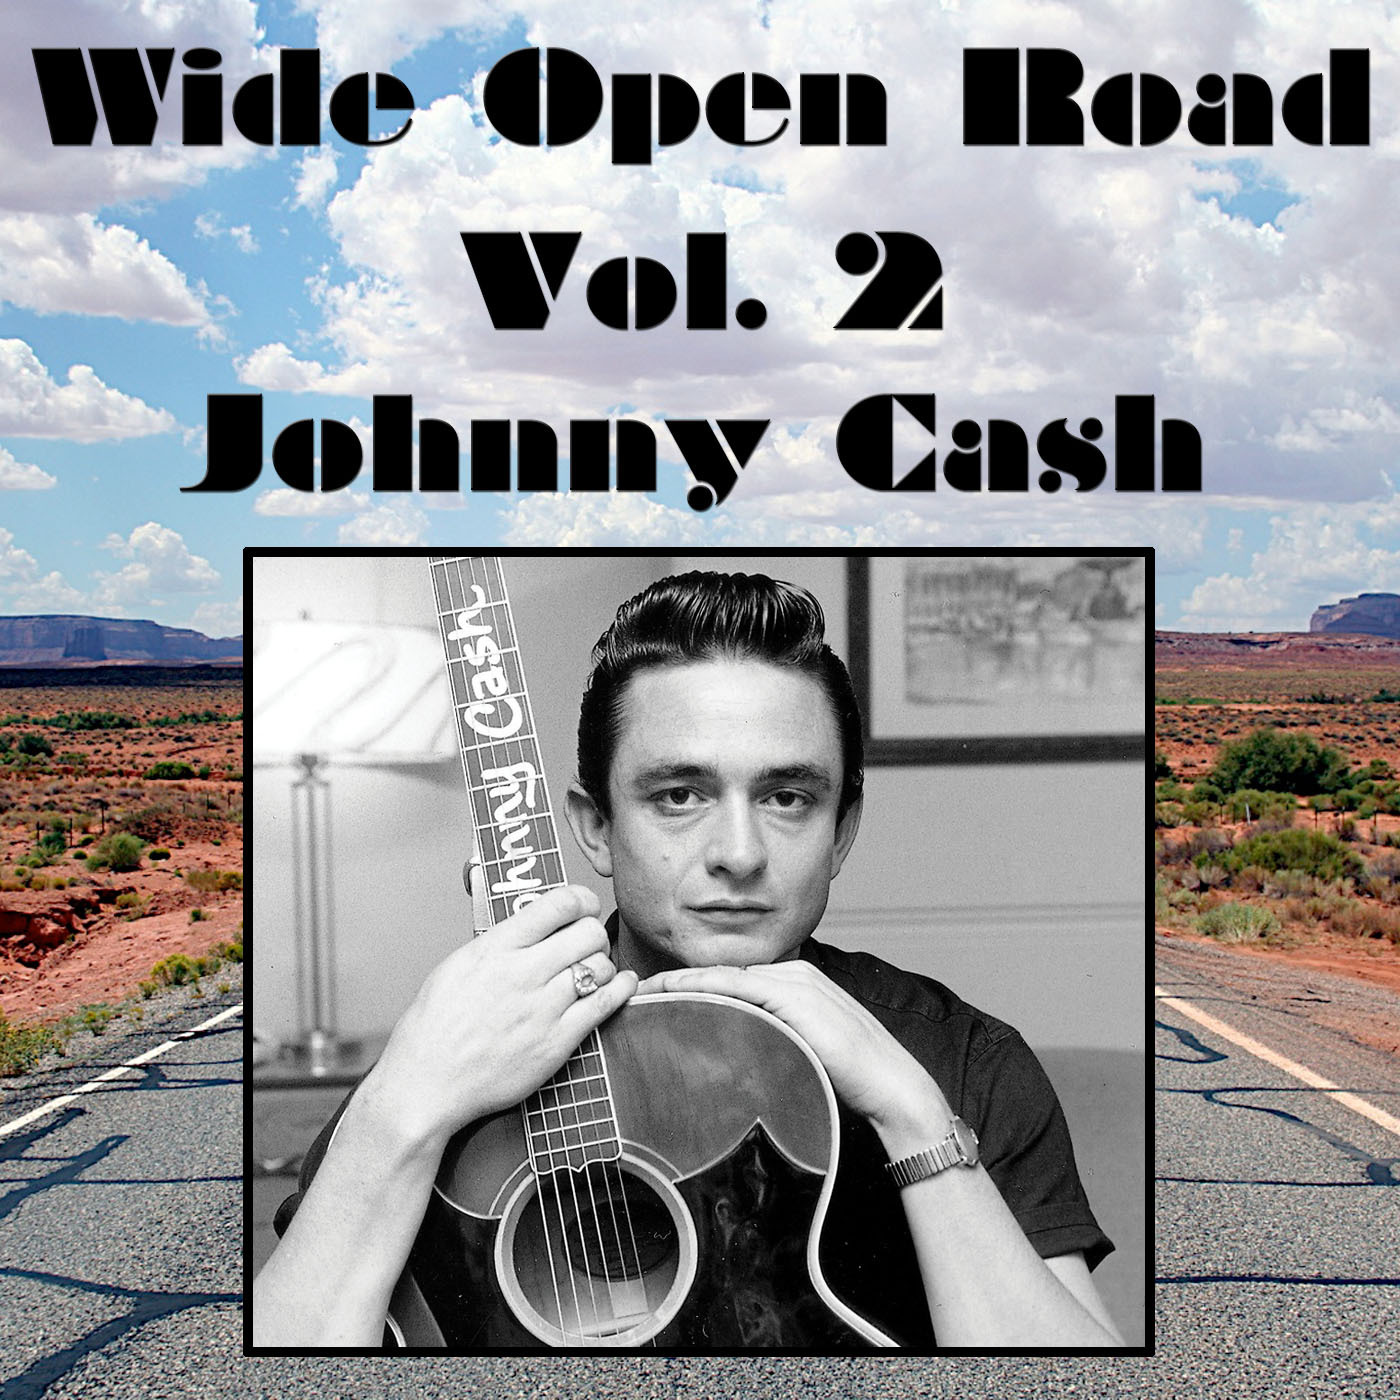 Wide Open Road, Vol. 2